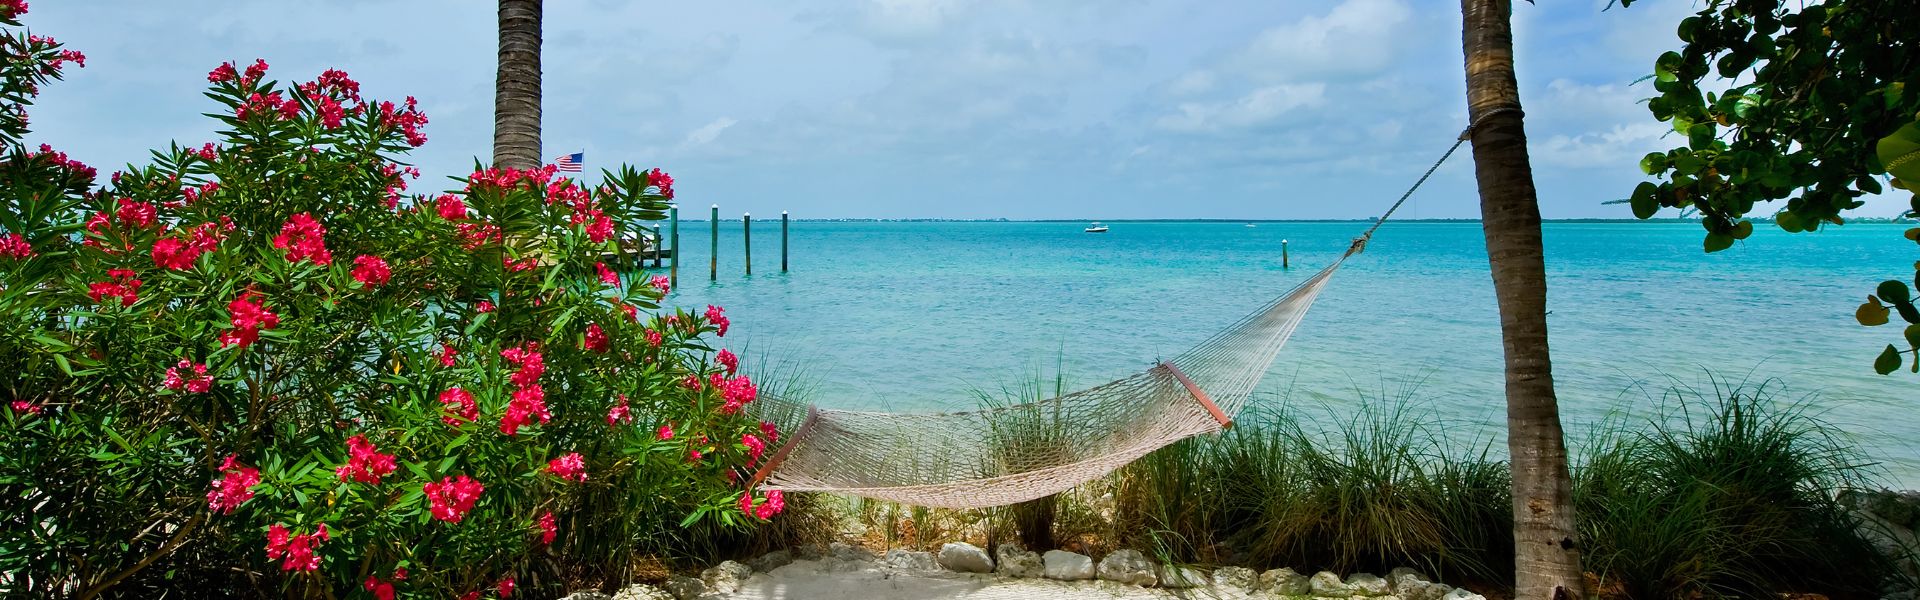 Florida Keys and Key West FL hammock Campaign page 09Aug22